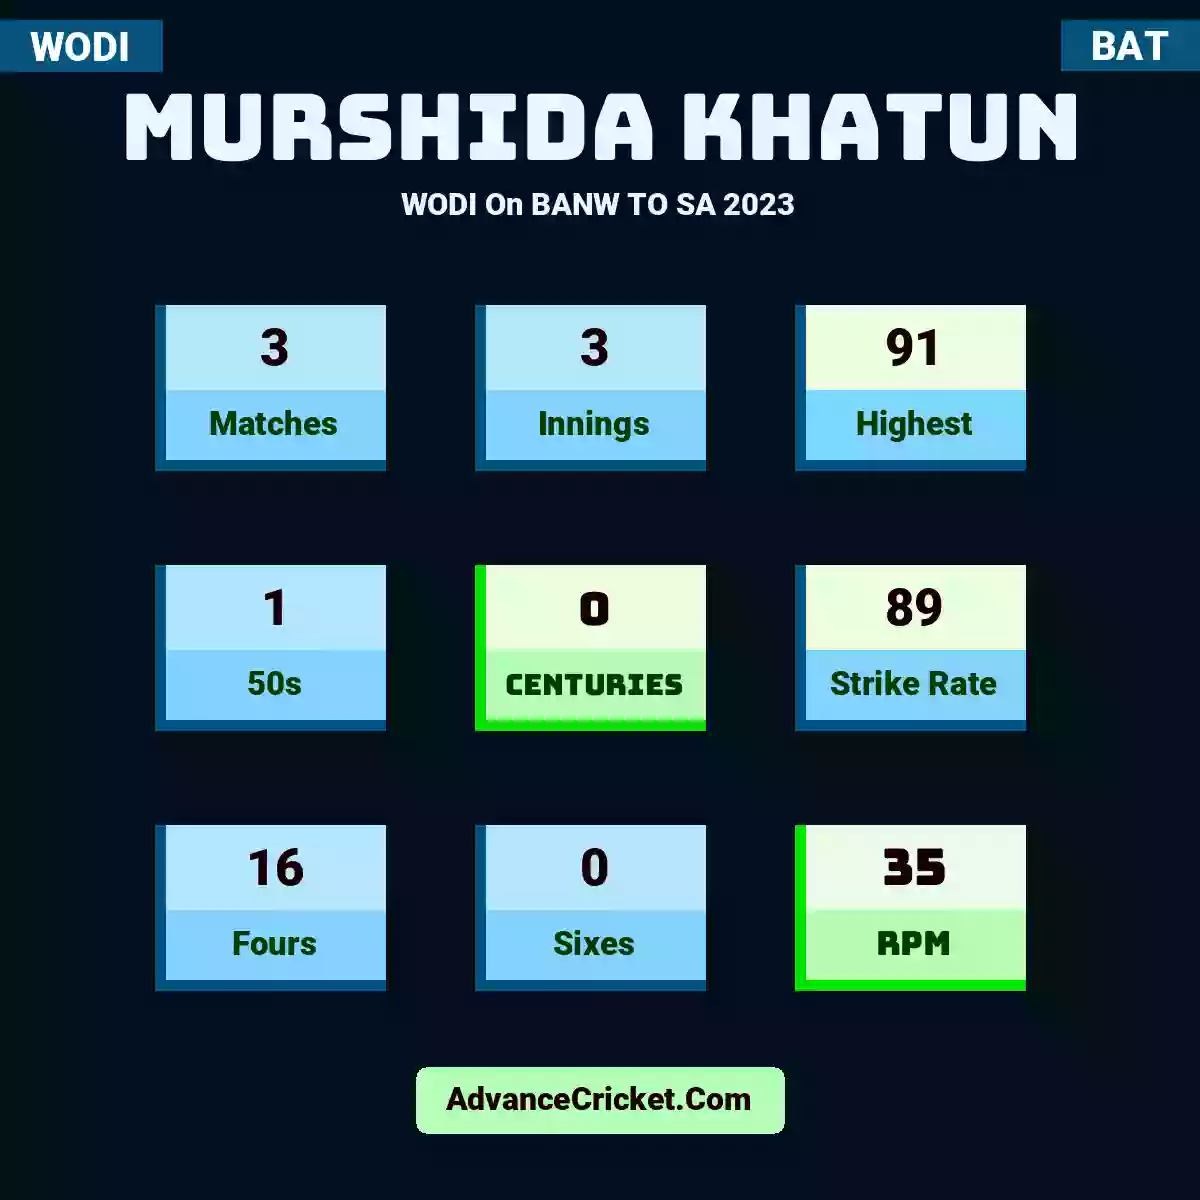 Murshida Khatun WODI  On BANW TO SA 2023, Murshida Khatun played 3 matches, scored 91 runs as highest, 1 half-centuries, and 0 centuries, with a strike rate of 89. M.Khatun hit 16 fours and 0 sixes, with an RPM of 35.